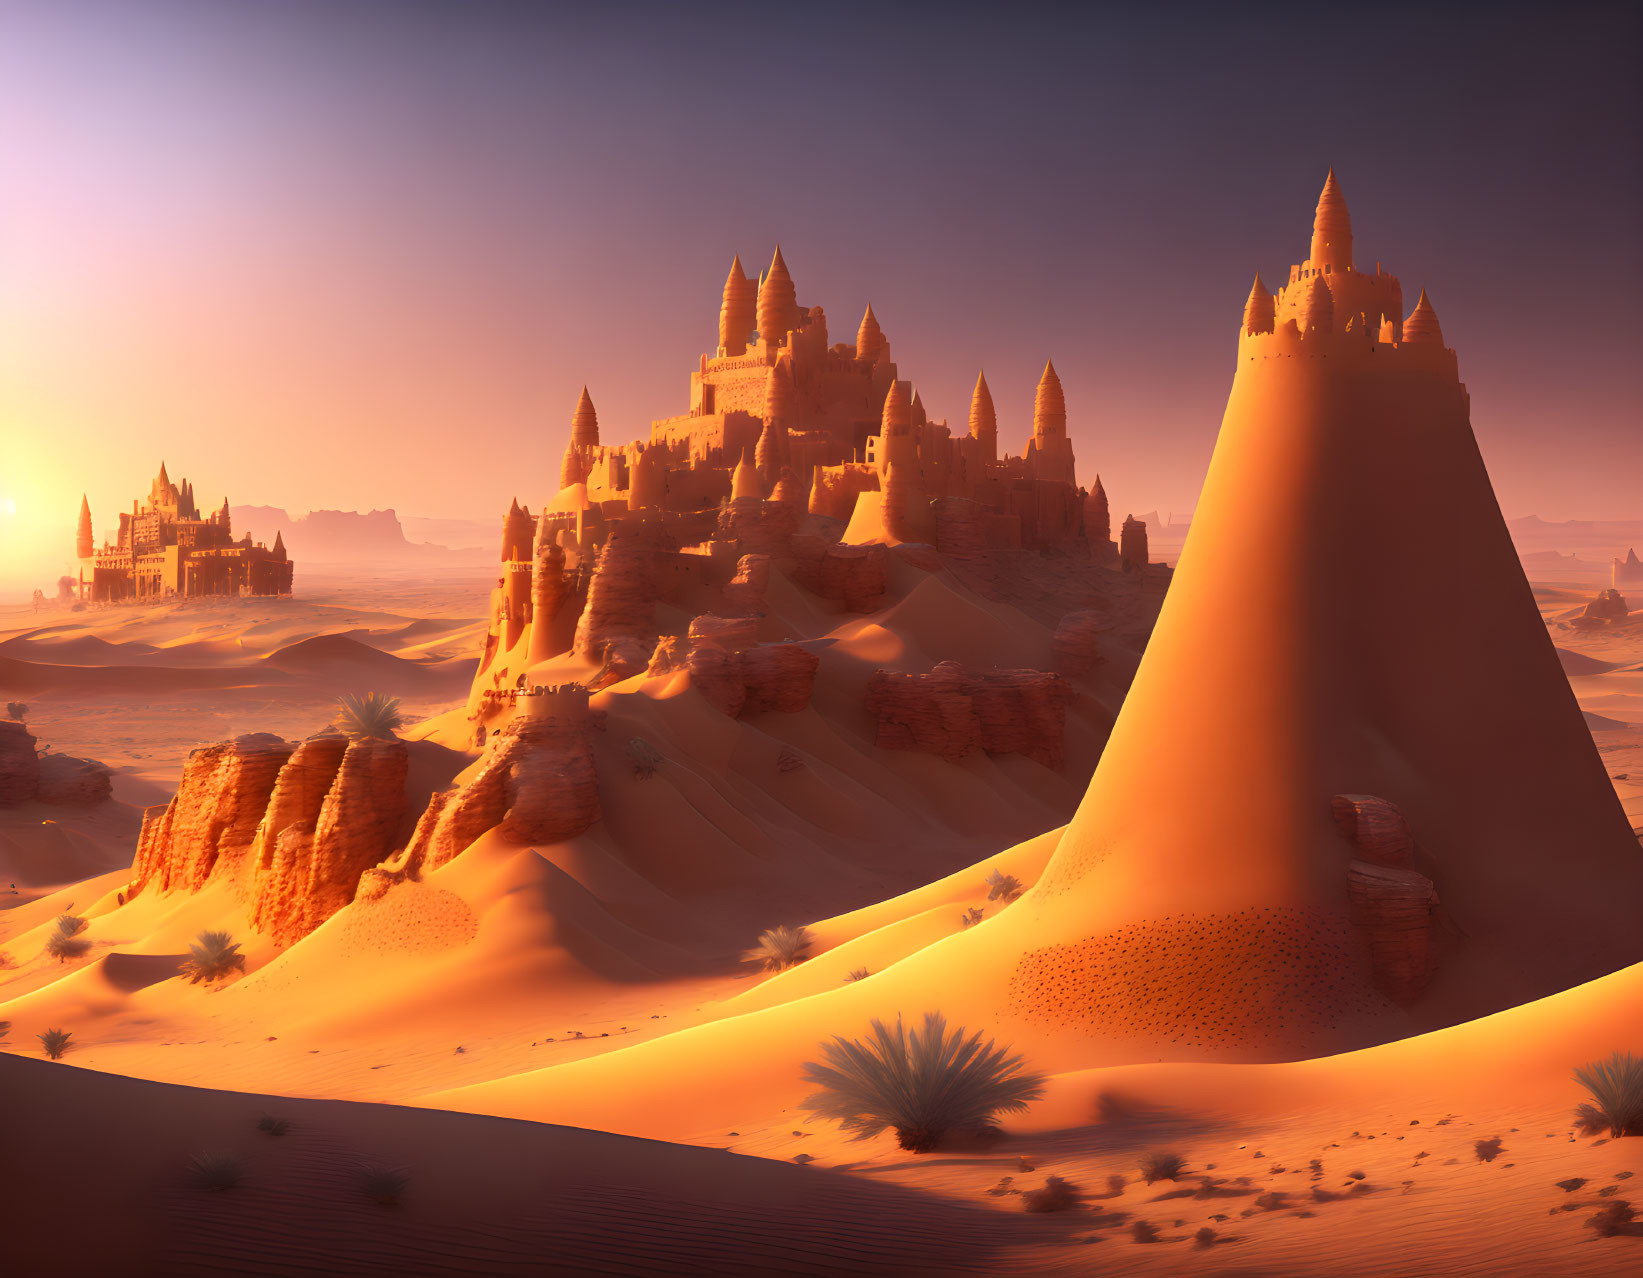 Fantastical desert scene with towering sandstone castles under hazy sunset sky